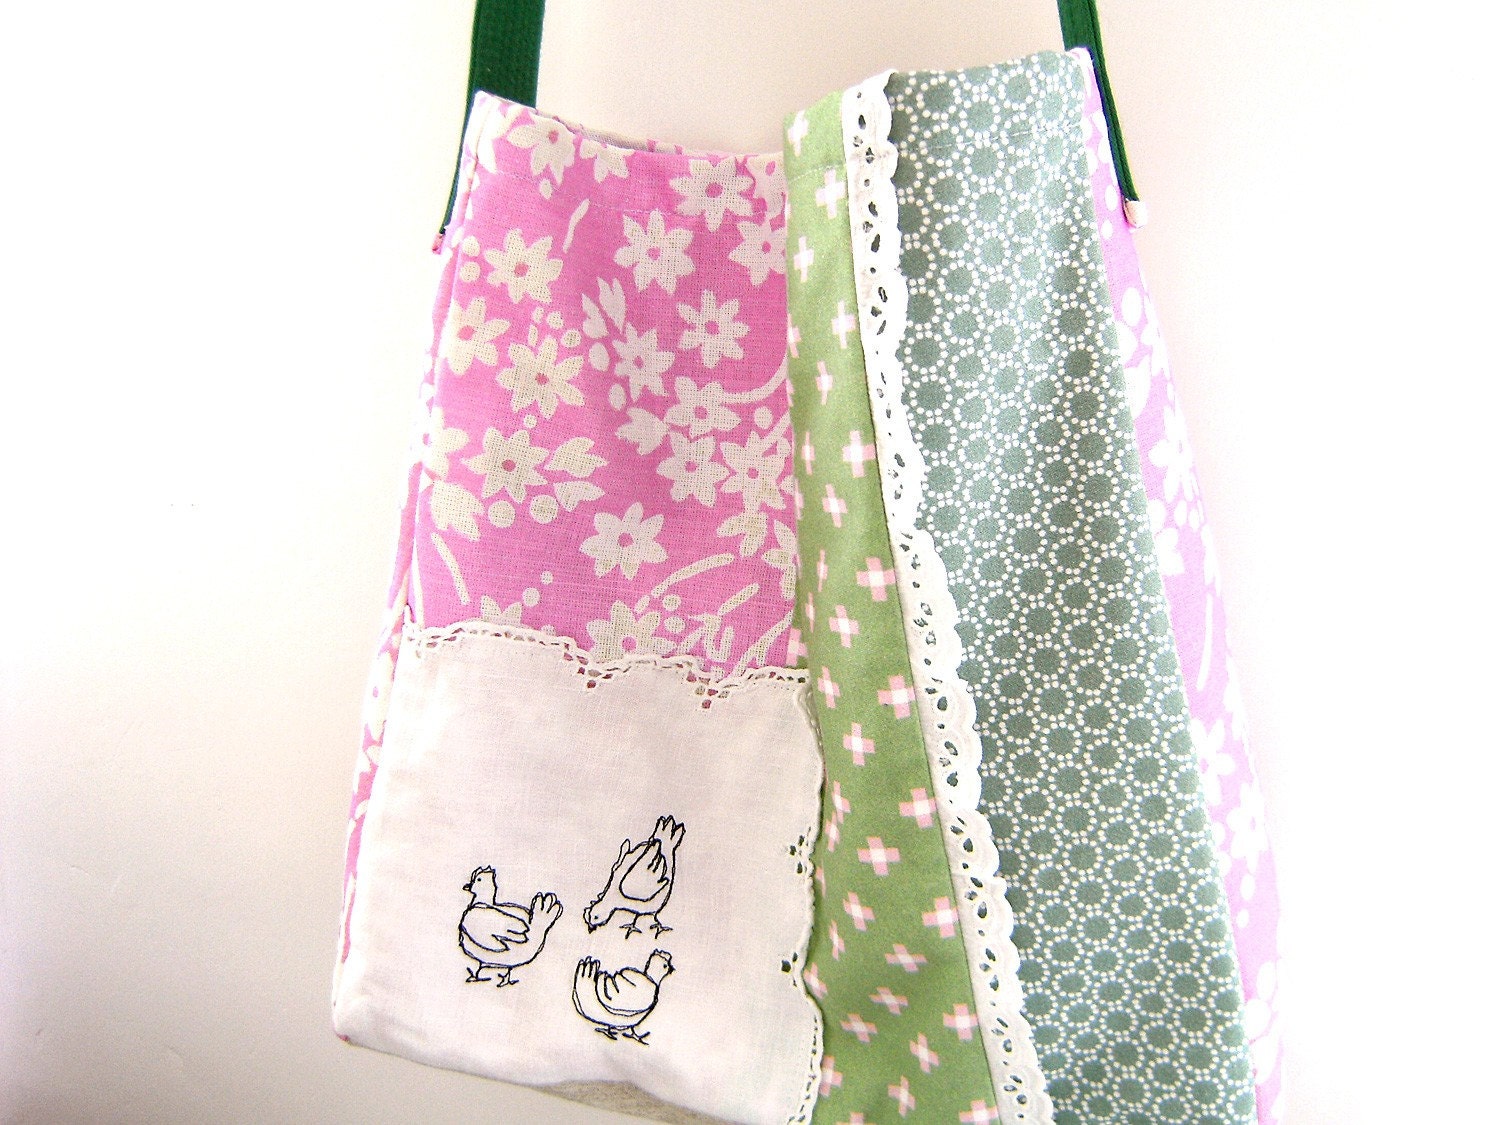 Embroidered Messenger Bag - 'La Basse-court' large patchwork bag in pink and green